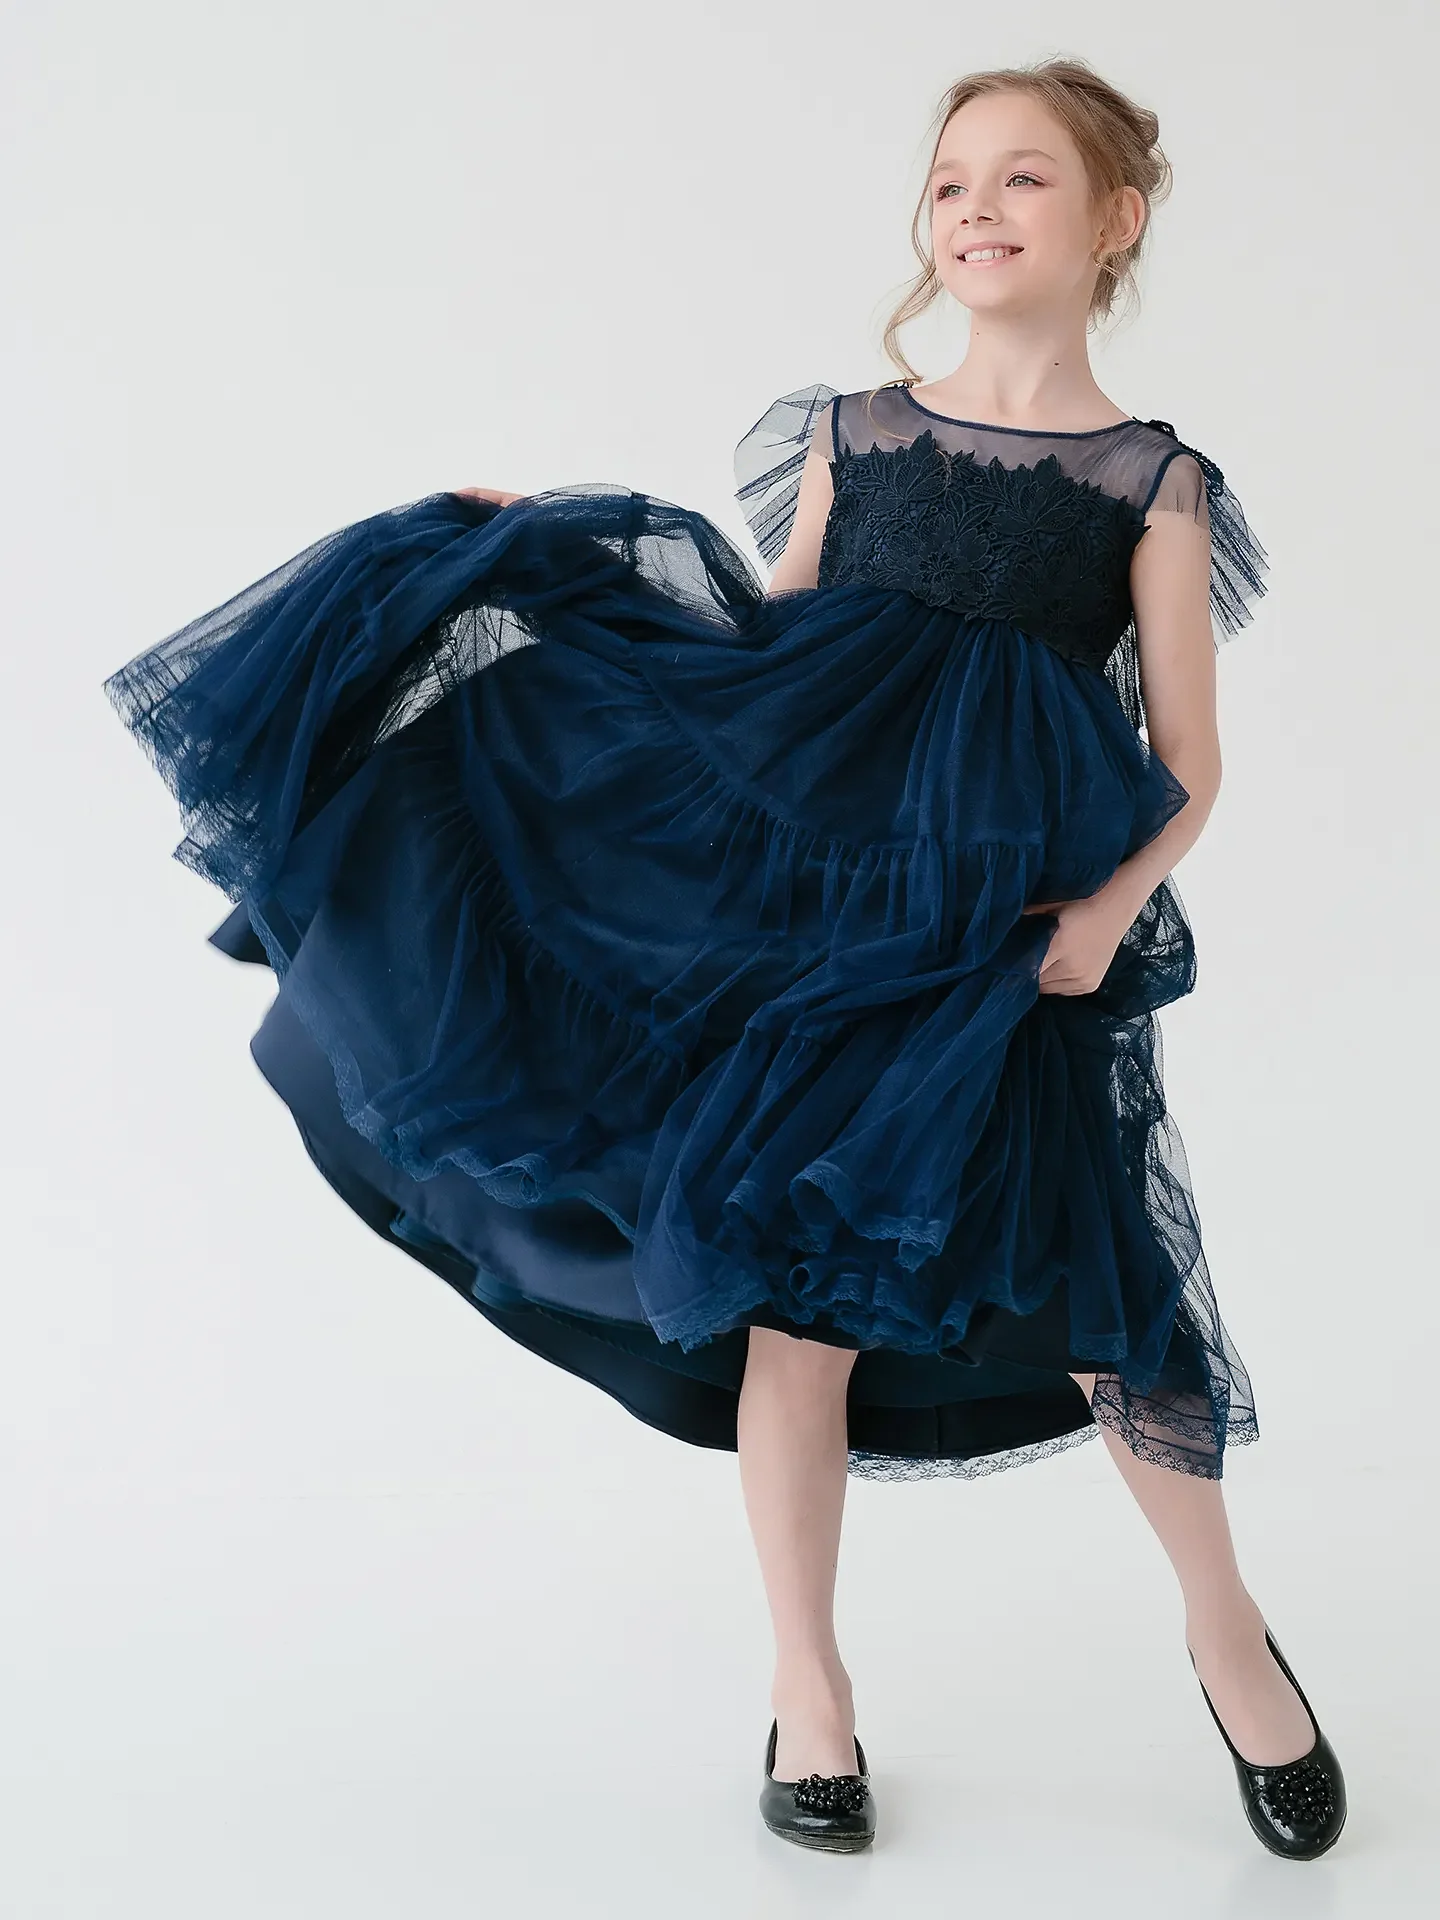 Transparent Yoke Stylish, High-quality ball gown for a girl Unona d'Art girl's dress